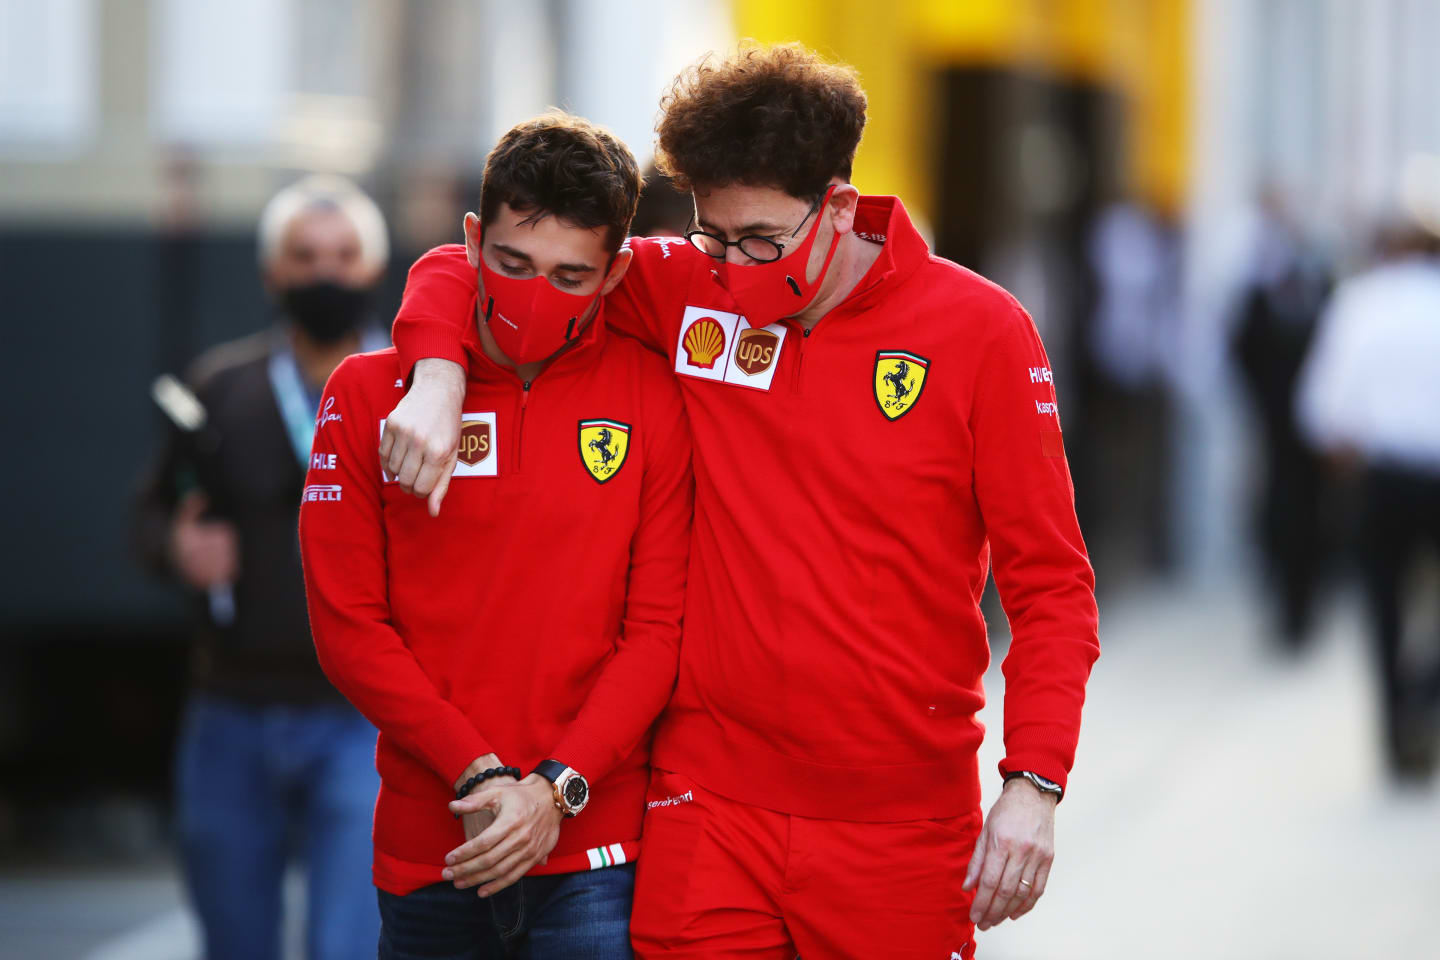 IMOLA, ITALY - OCTOBER 30: Scuderia Ferrari Team Principal Mattia Binotto embraces Charles Leclerc